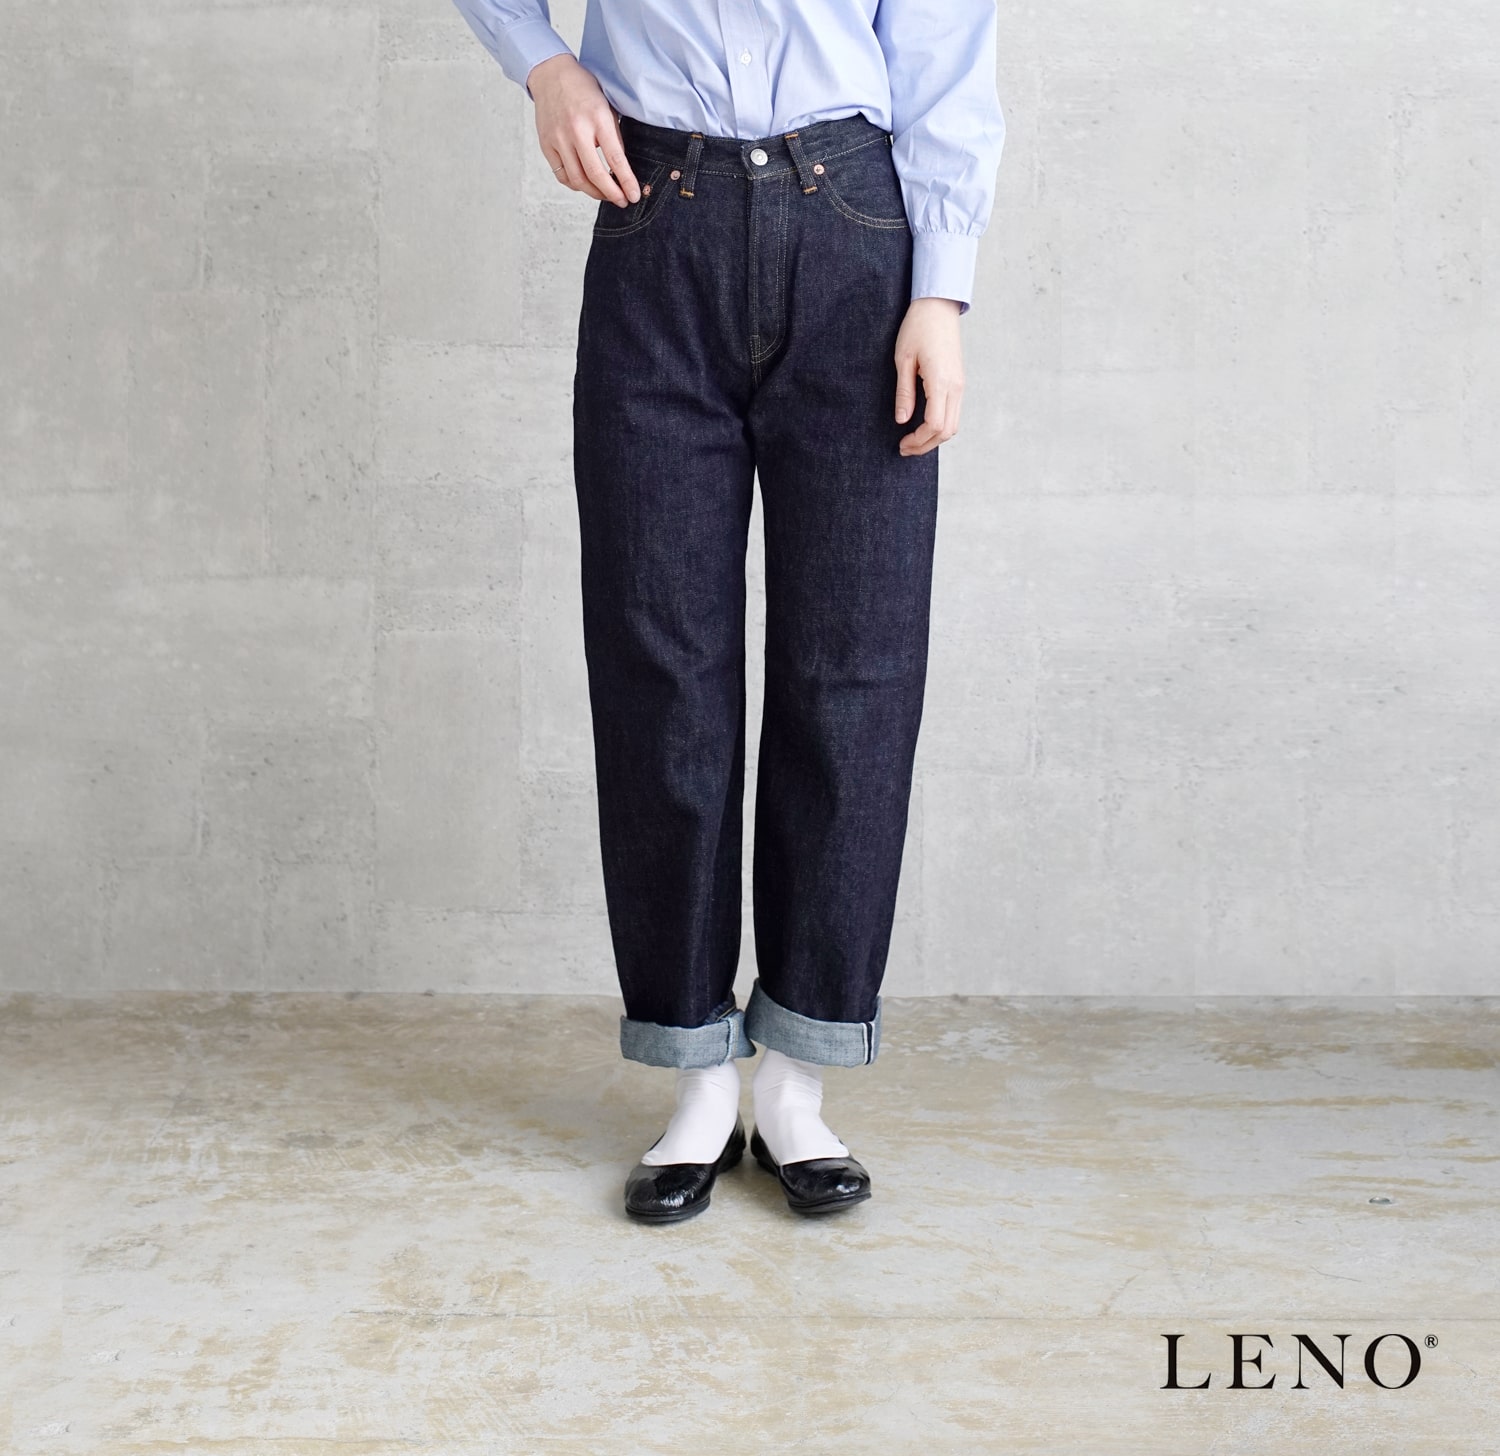 LENO(リノ)ストレートジーンズ”BRIGITTE” leno-j001【サイズ交換初回無料】 | iroma..aranciato